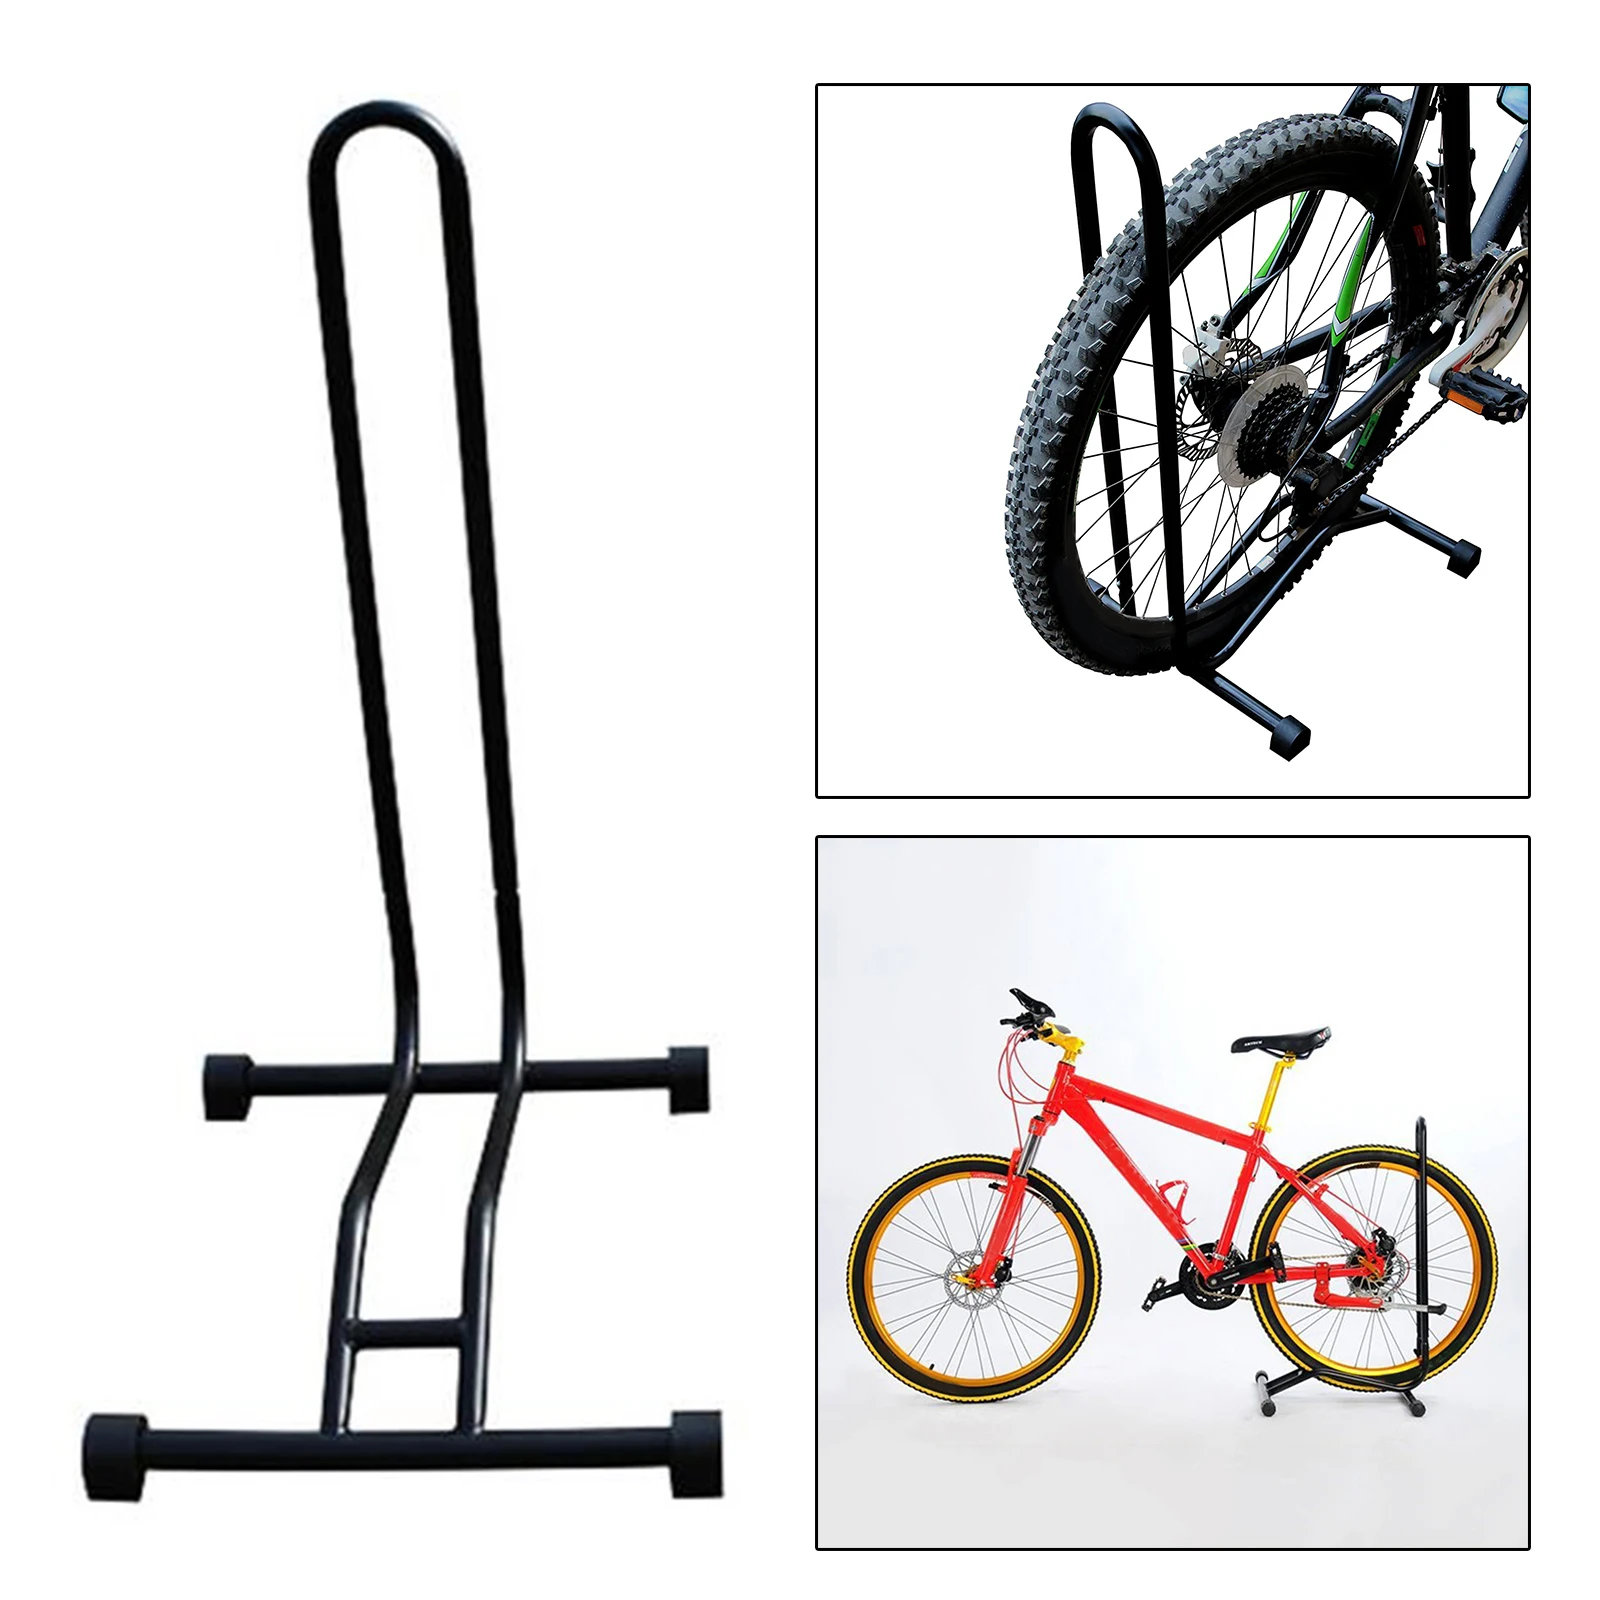 VGEBY1 Bike Display Rack Adjustable Stable Bicycle Display Stand Holder Stands for Mountain Bike Road Bike 